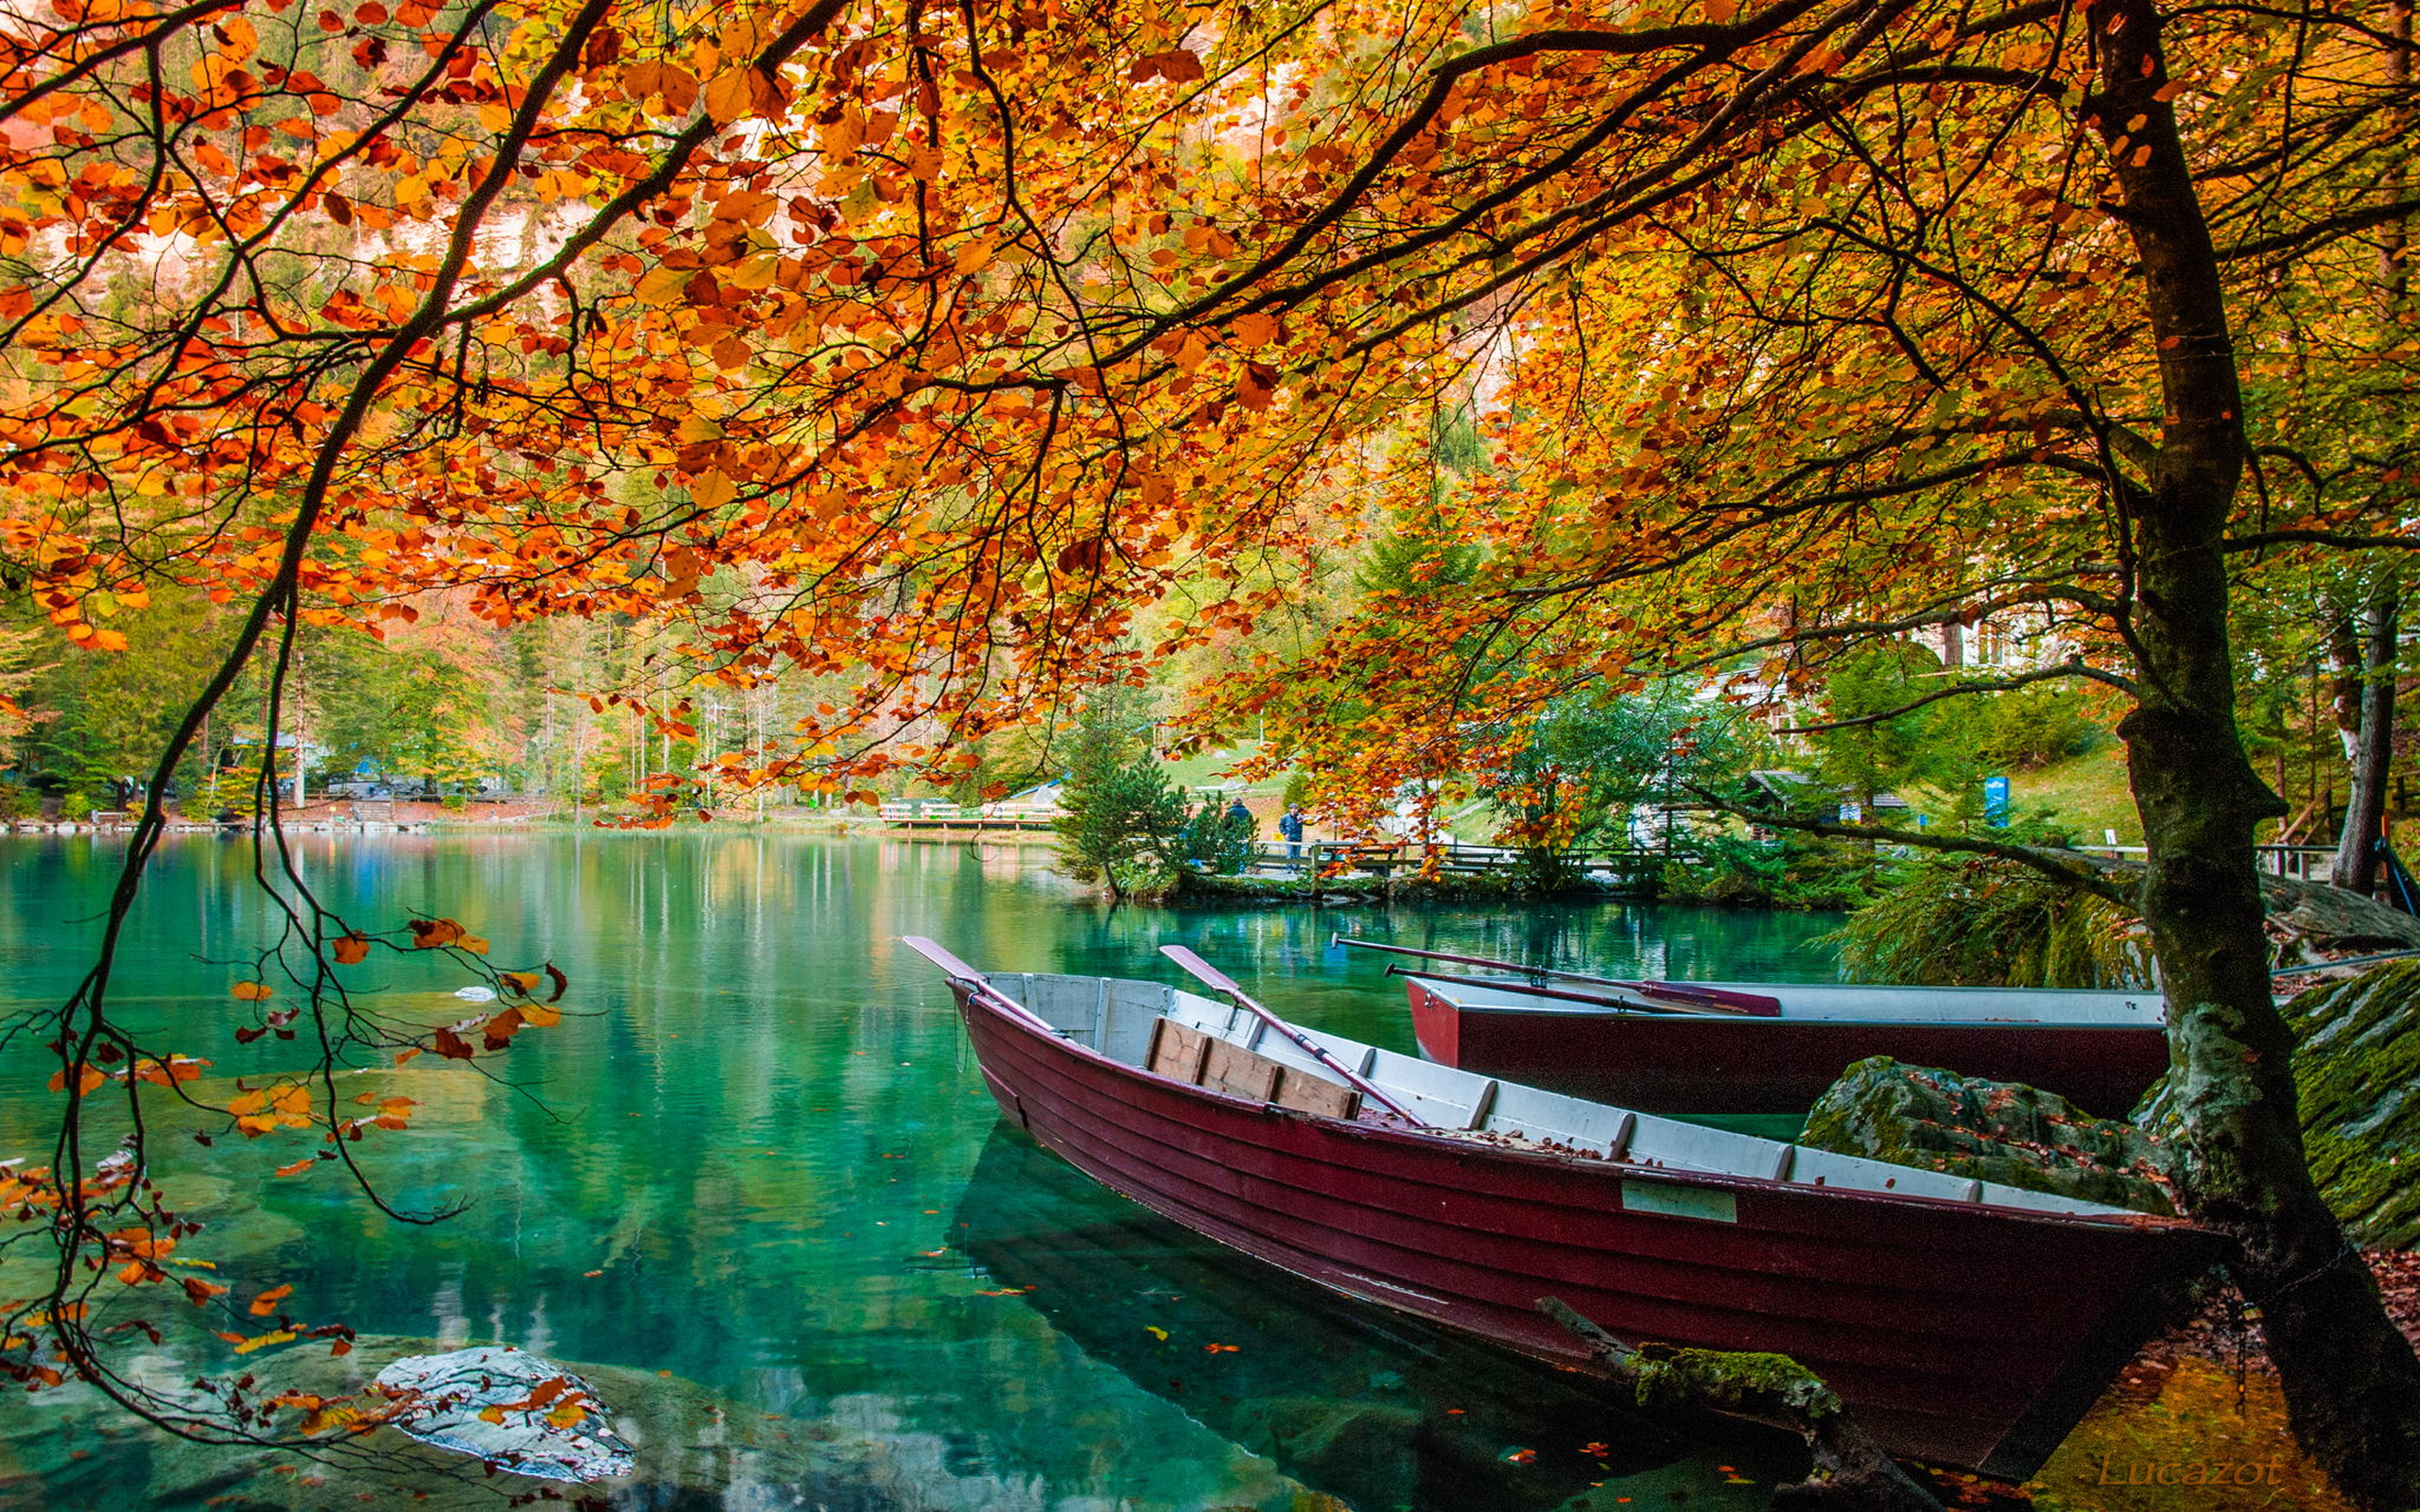 Autumn Lake Beautiful Turquoise Water Trees Hd Wallpaper 73142